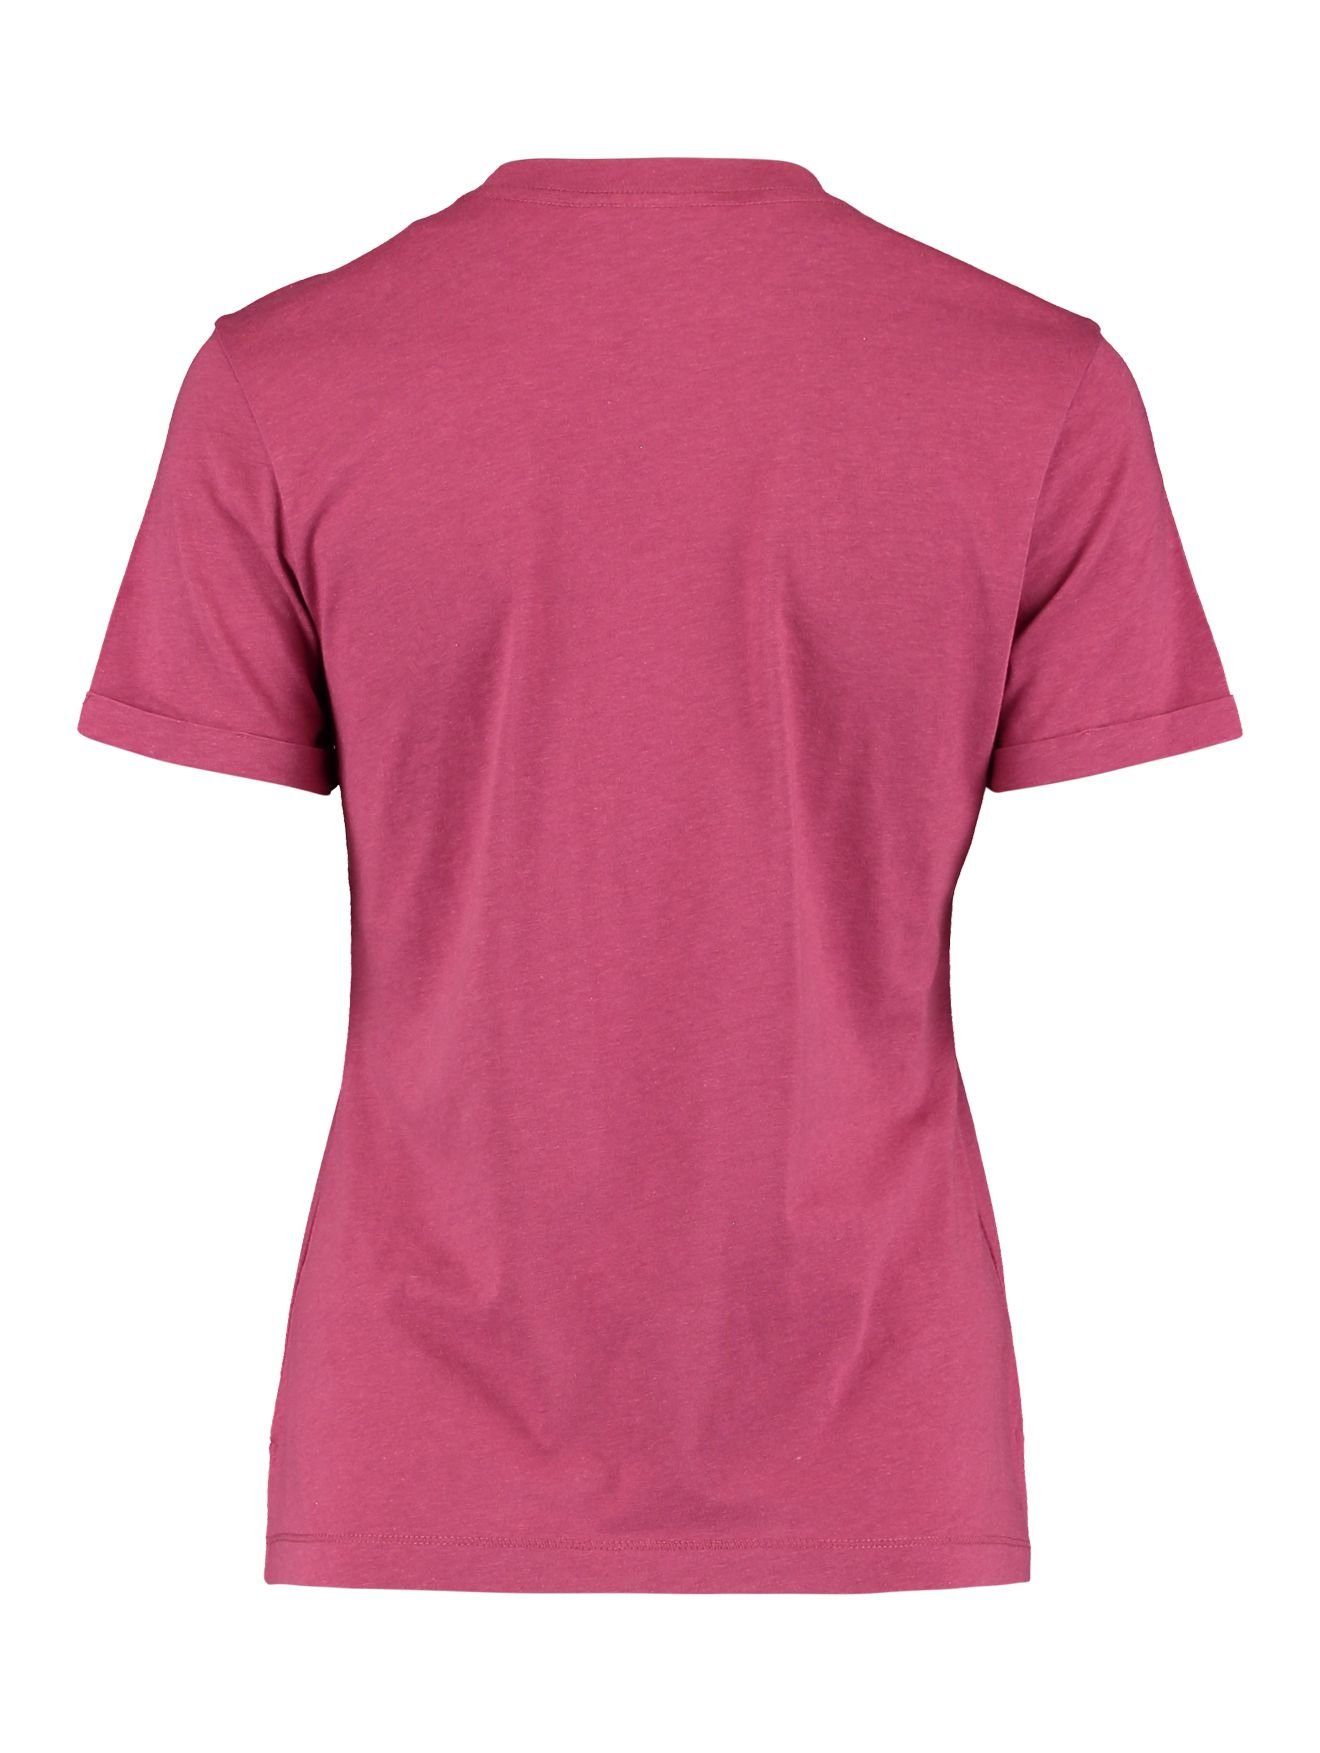 Ma44delaine T-Shirt Berry Shirt ZABAIONE